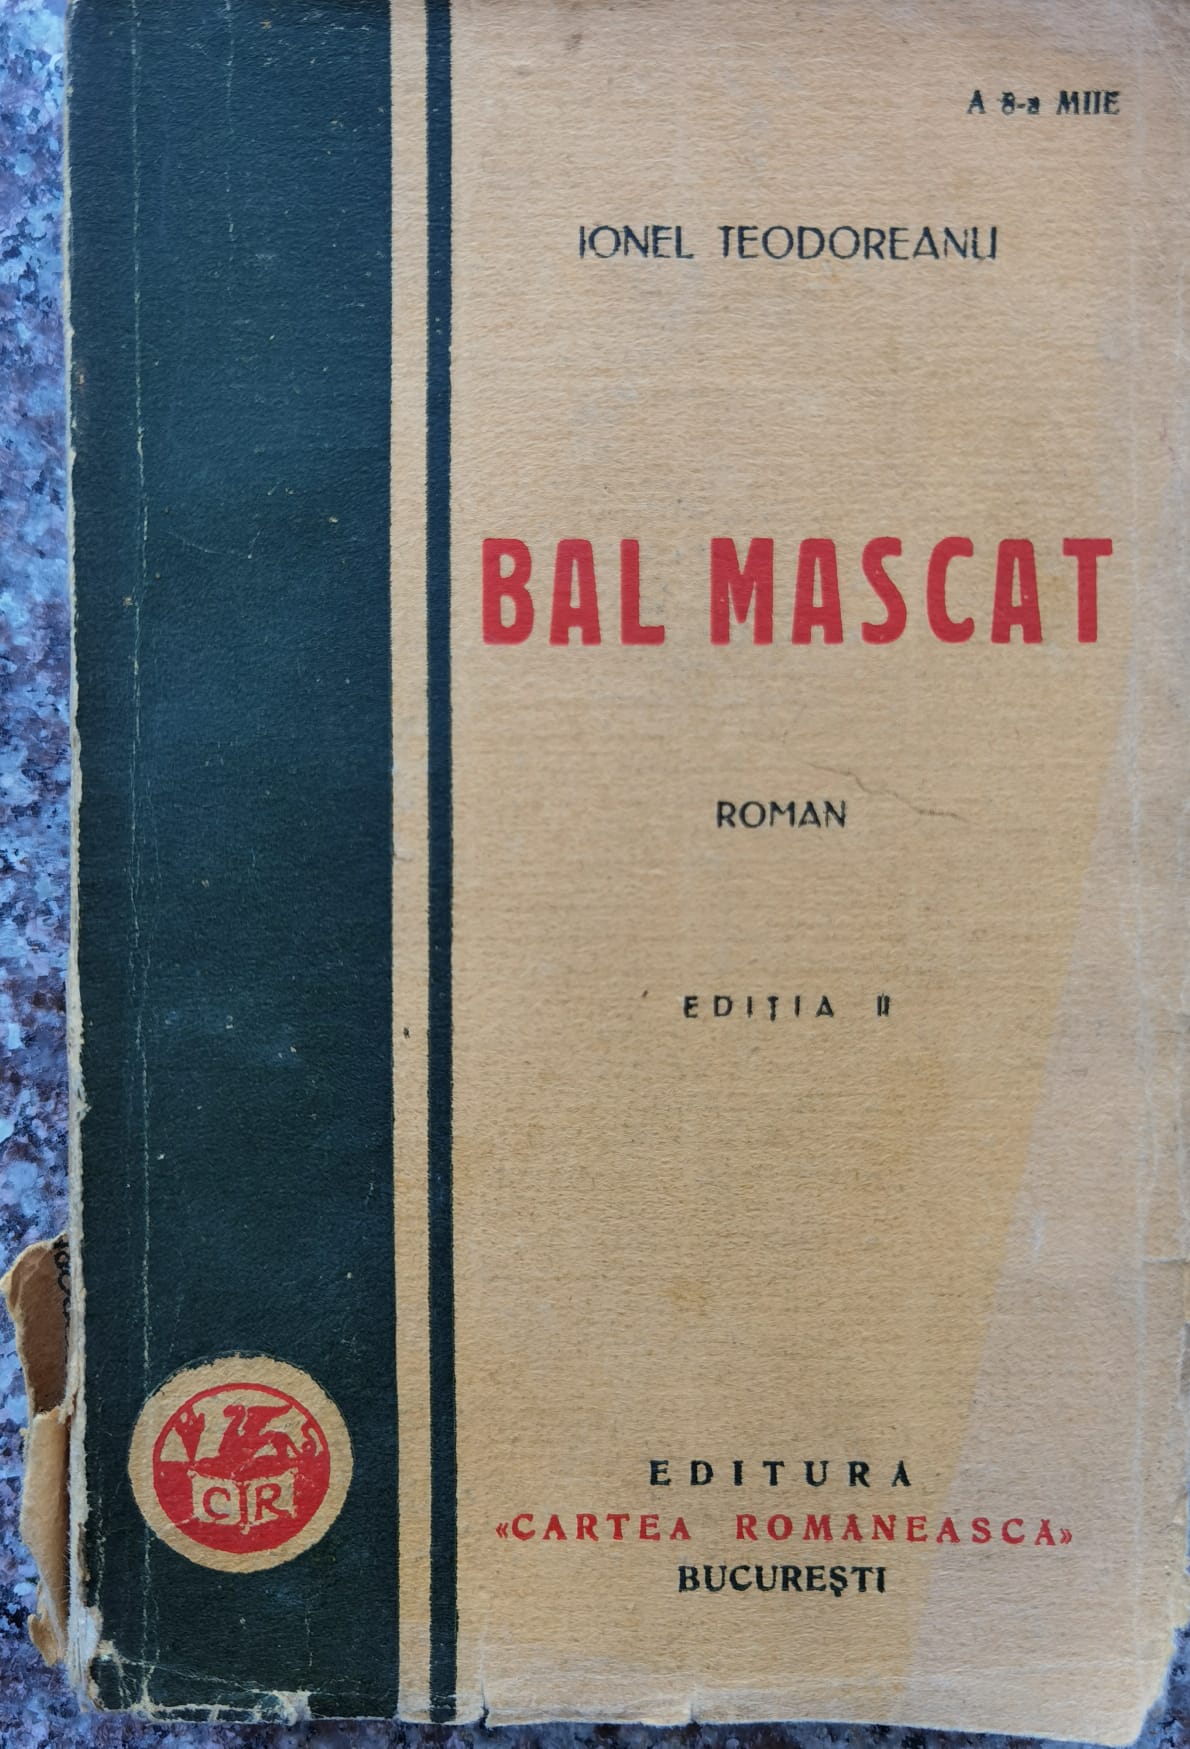 BAL MASCAT EDITIA A II-A                                                                  ...